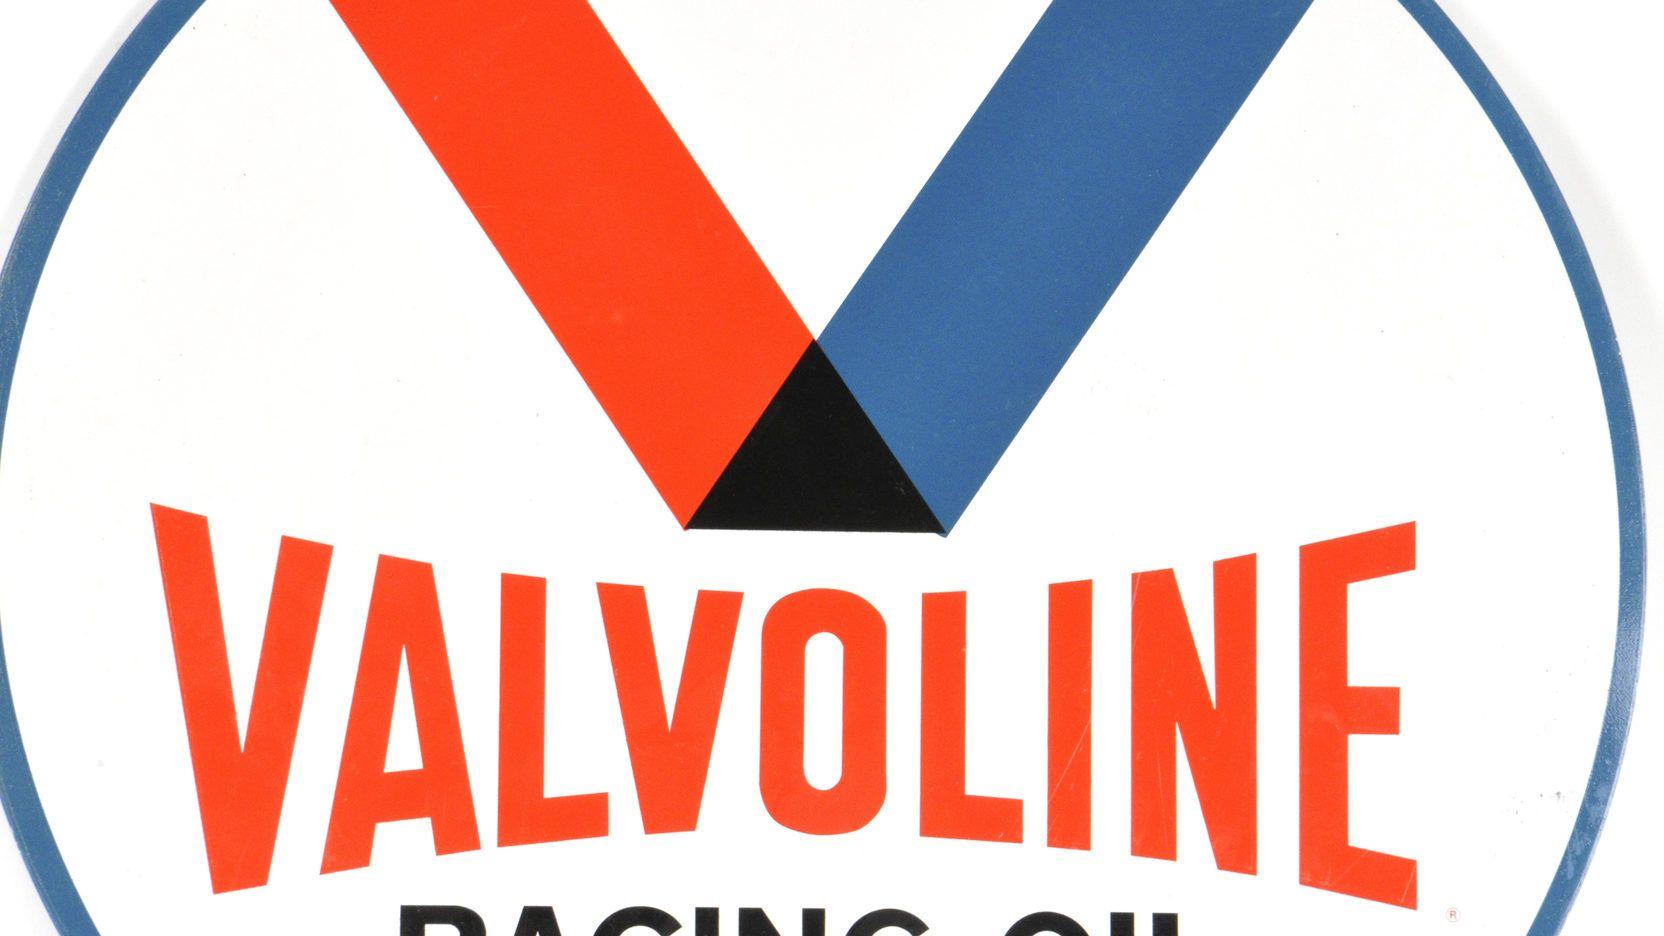 Valvoline™ Launches 150th Commemorative Year